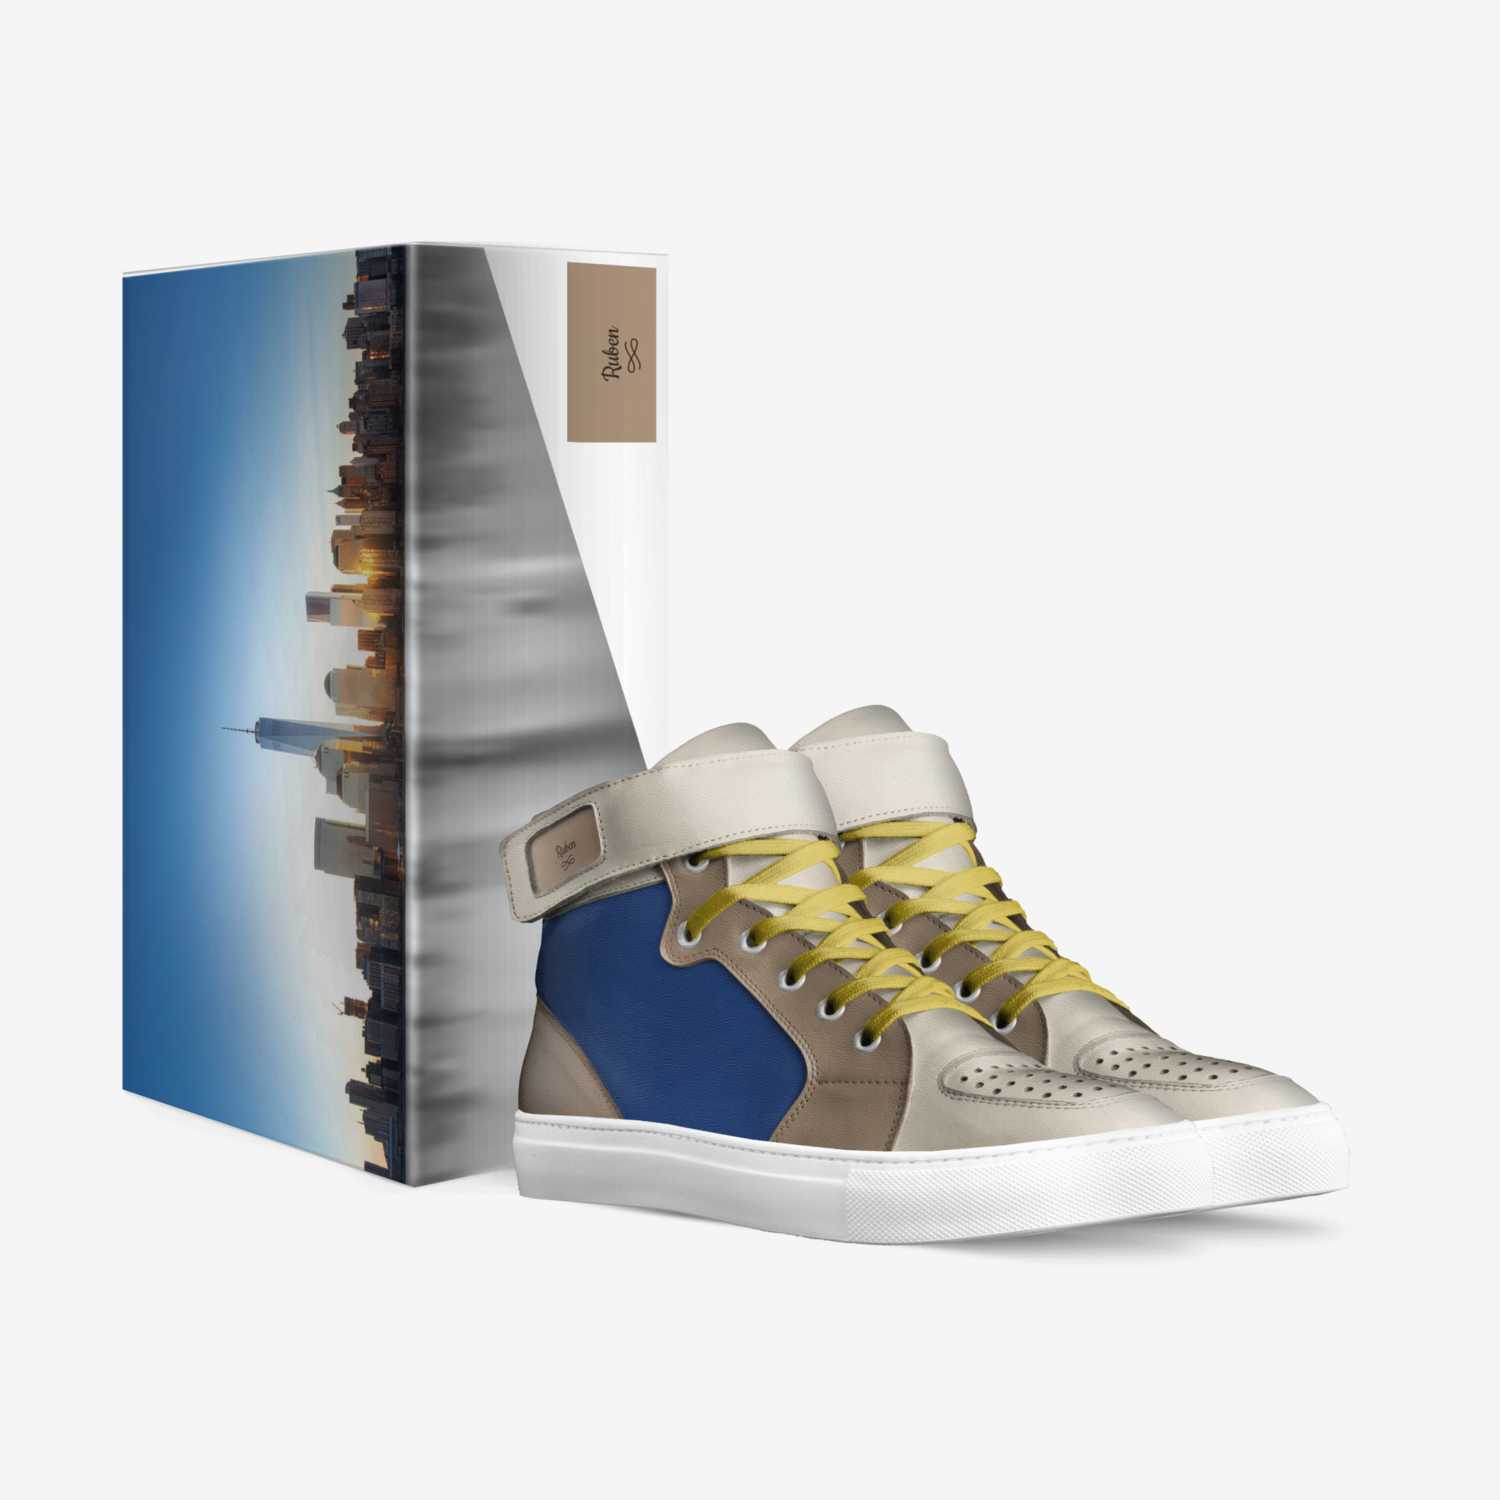 Ruben custom made in Italy shoes by Joe Doe | Box view